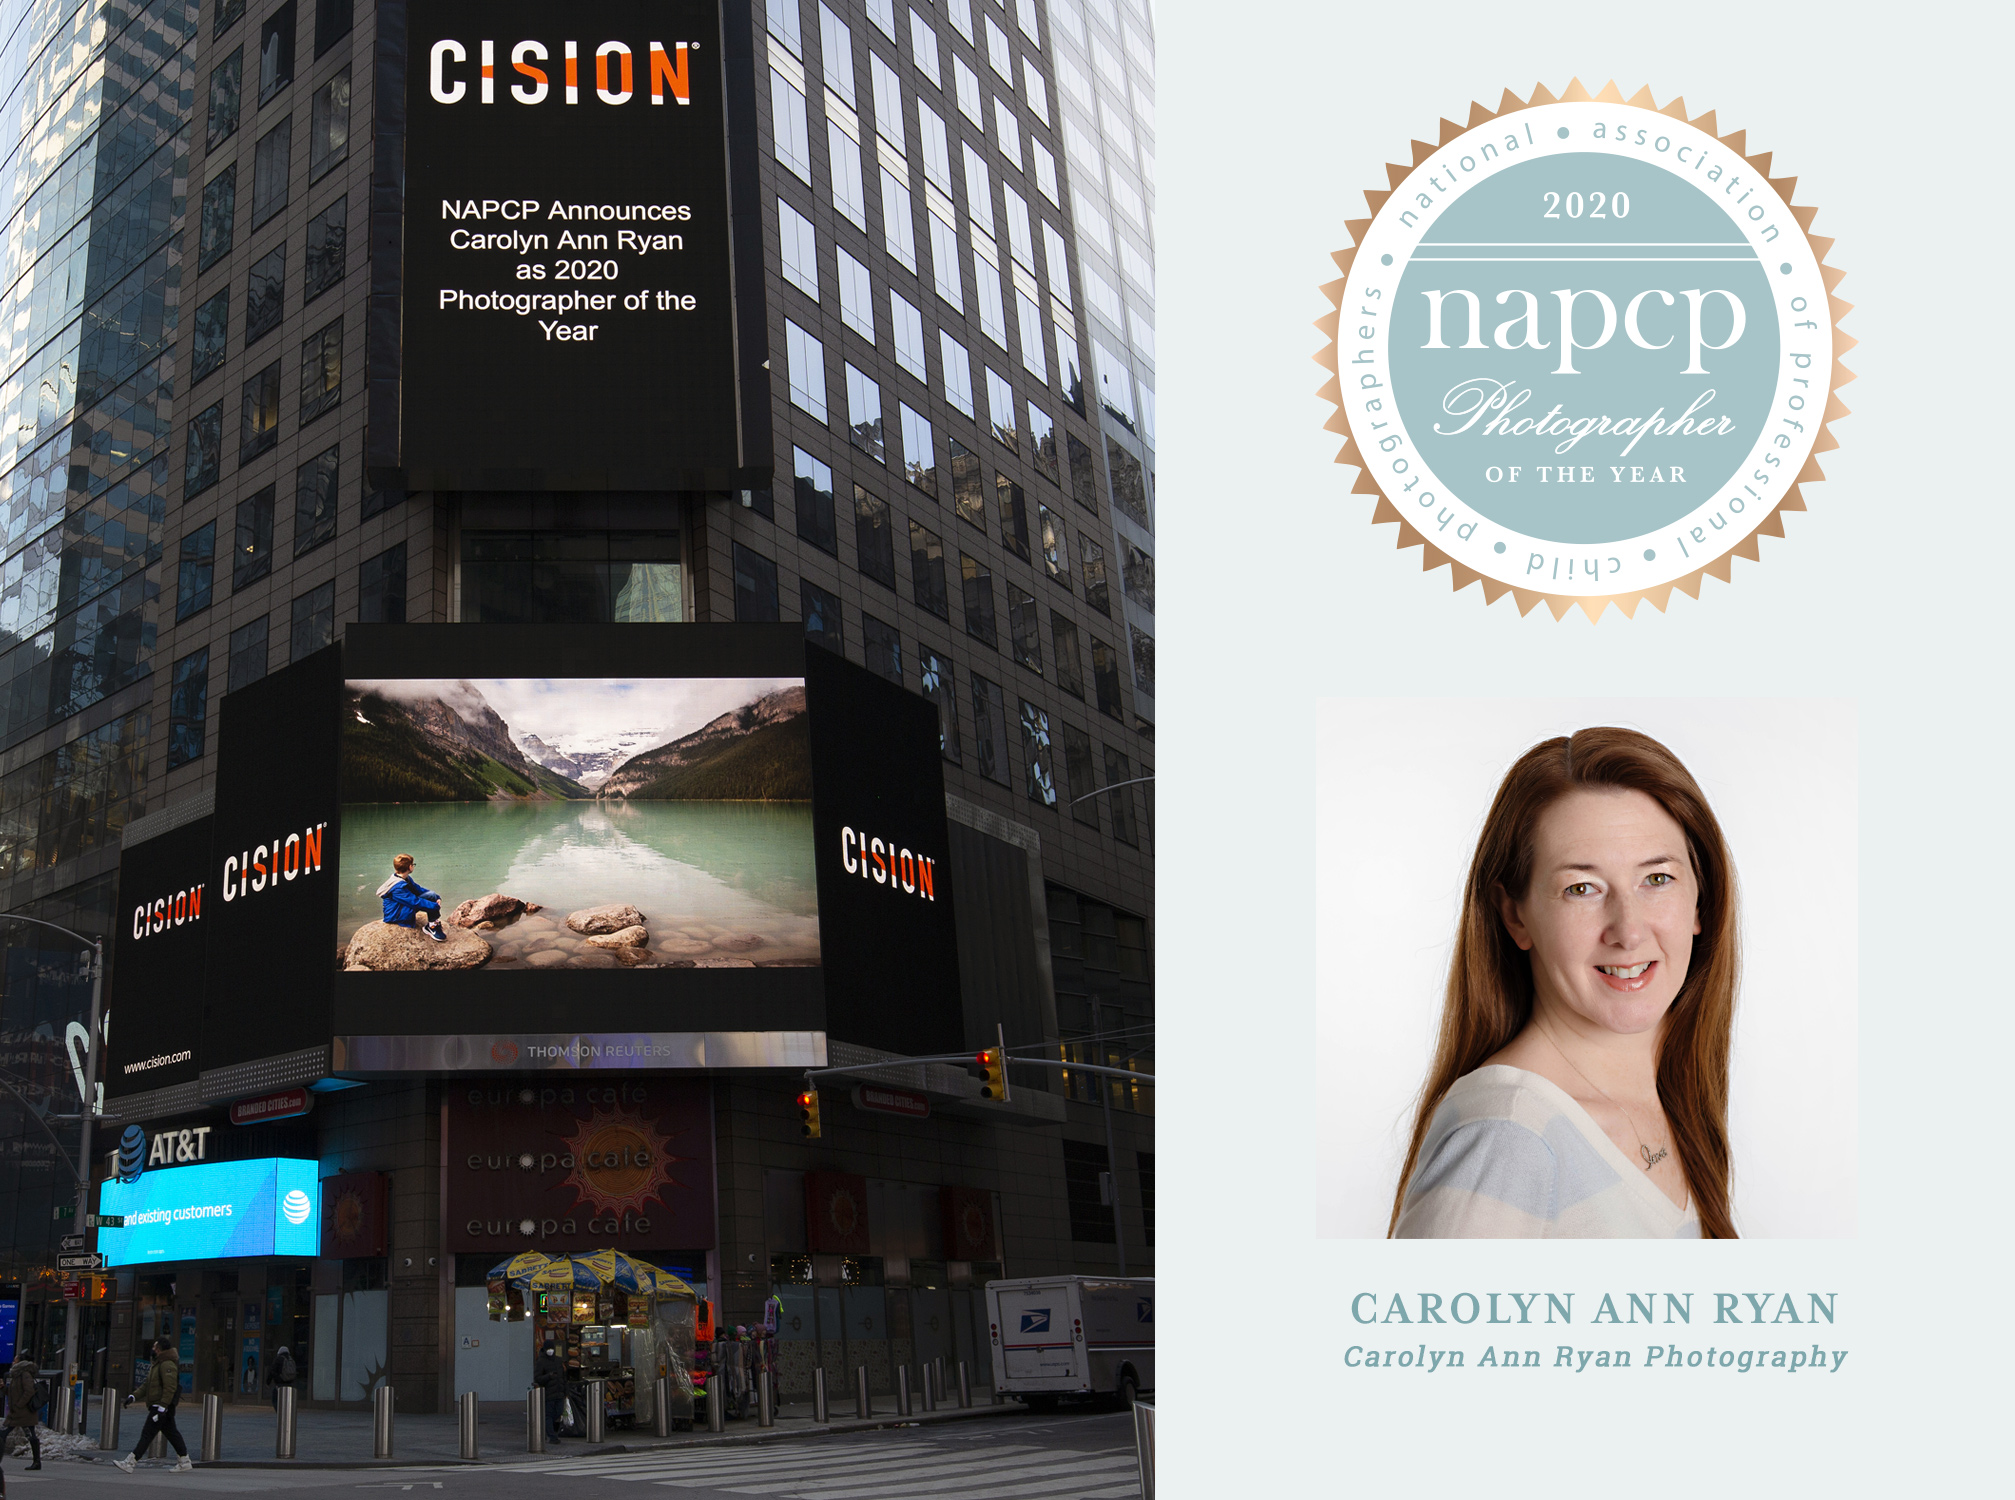 CISION, NAPCP Announces 2020 Photographer of the Year, Carolyn Ann Ryan, Carolyn Ann Ryan Photography, Times Square billboard, digital billboard, New York City